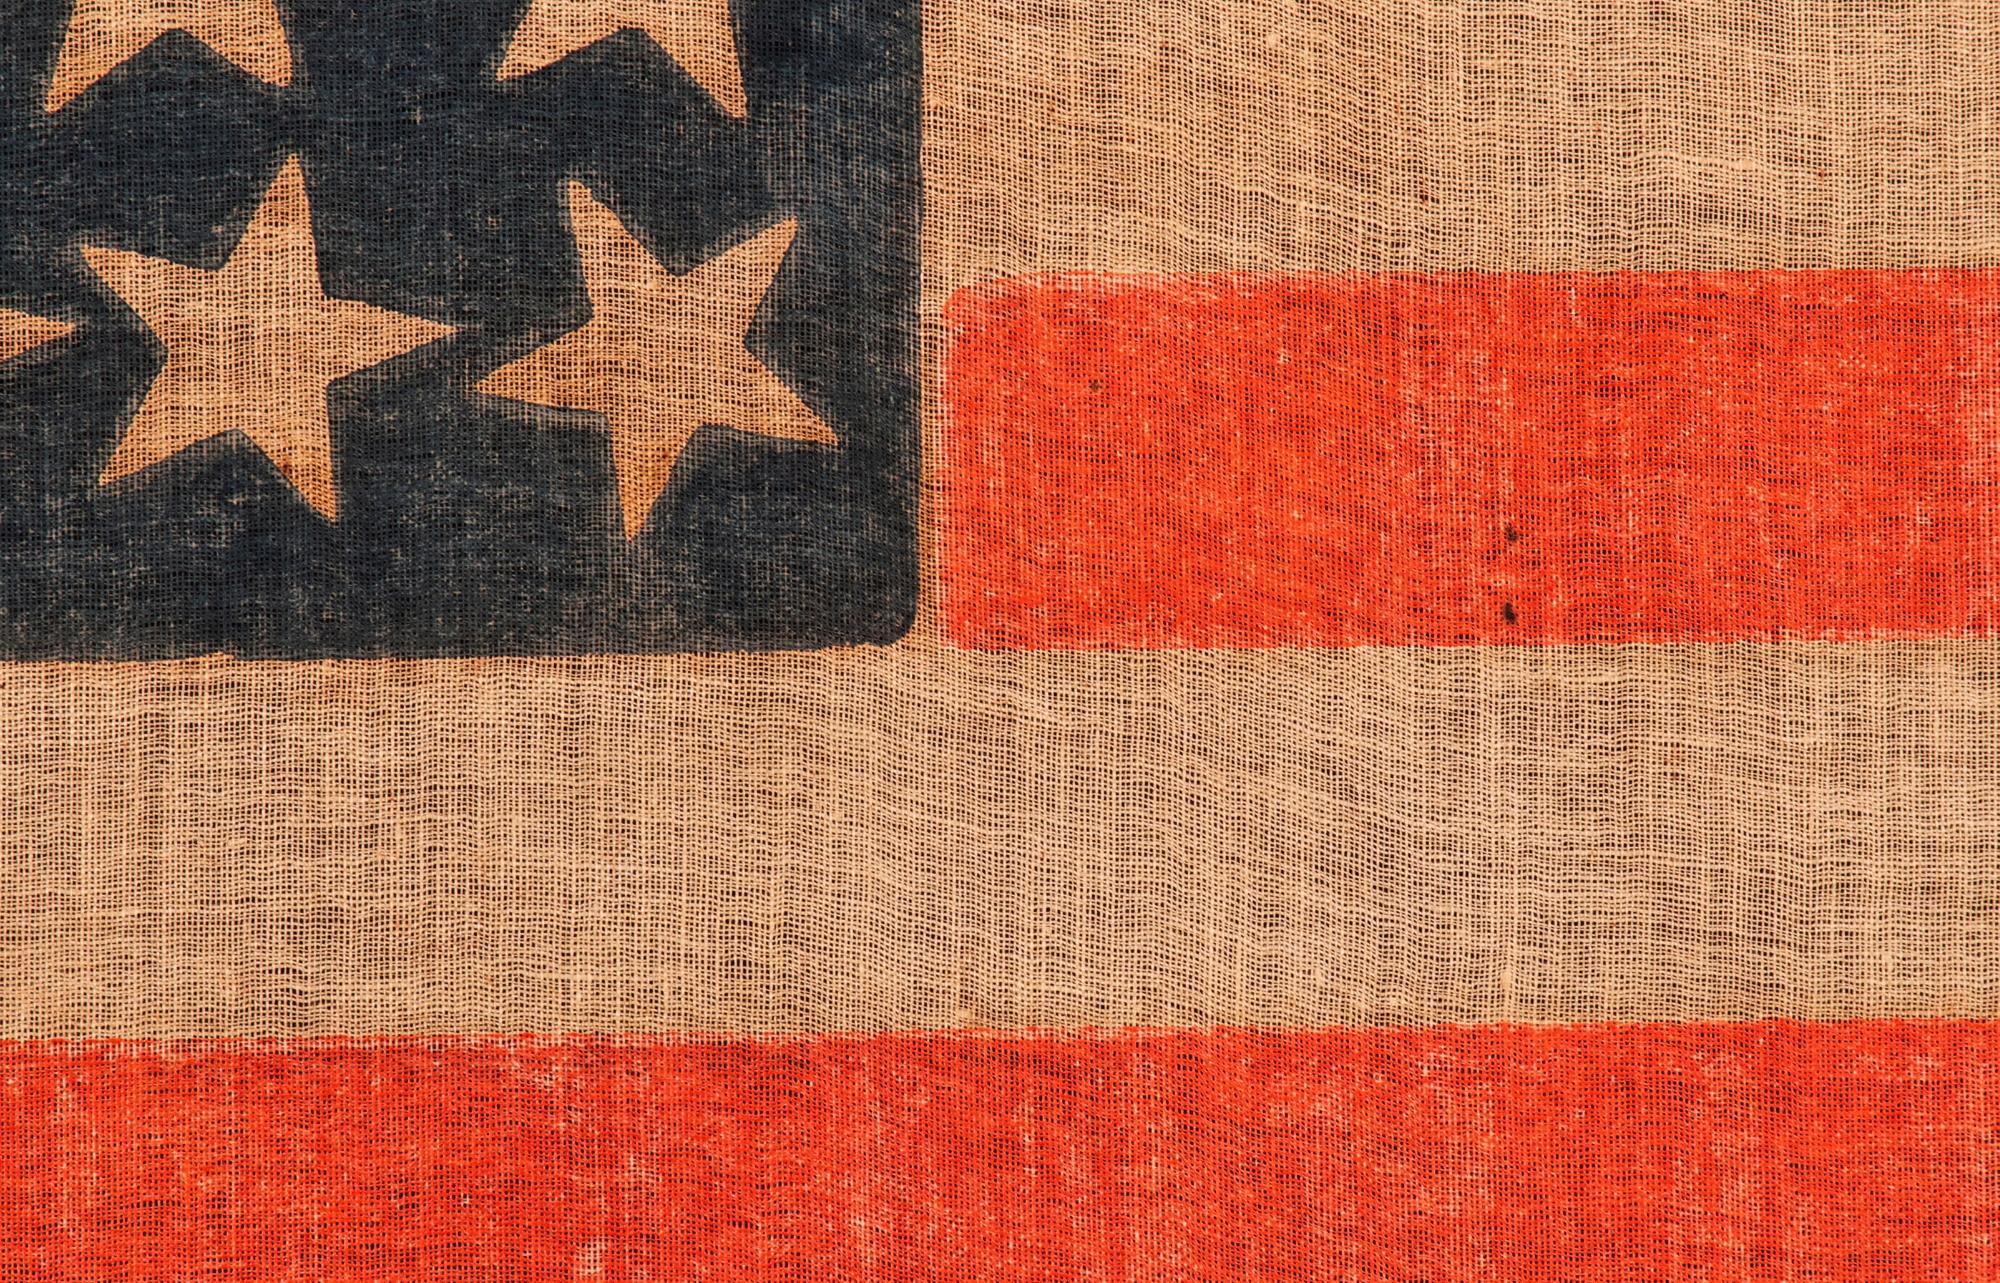 19th Century 38 Star Antique American Parade Flag, Colorado Statehood, ca 1876-1889 For Sale